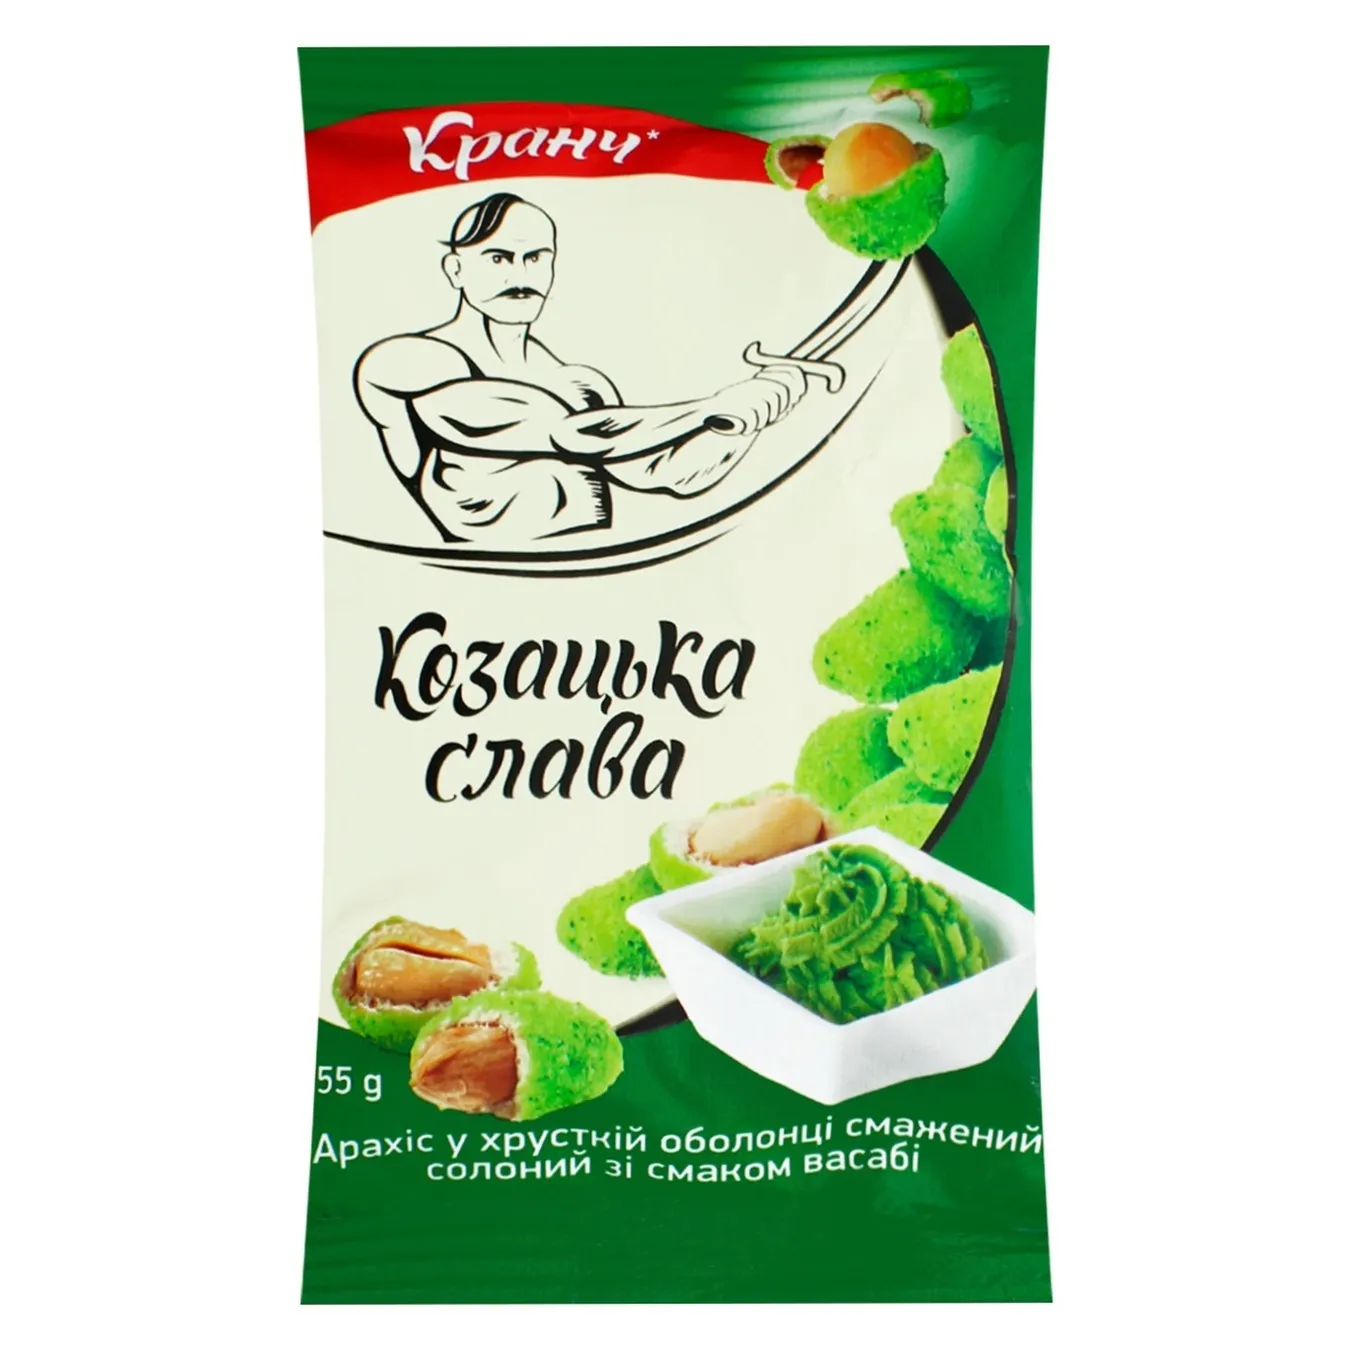 Kozatska Slava peanuts roasted in a shell with wasabi flavor 55g